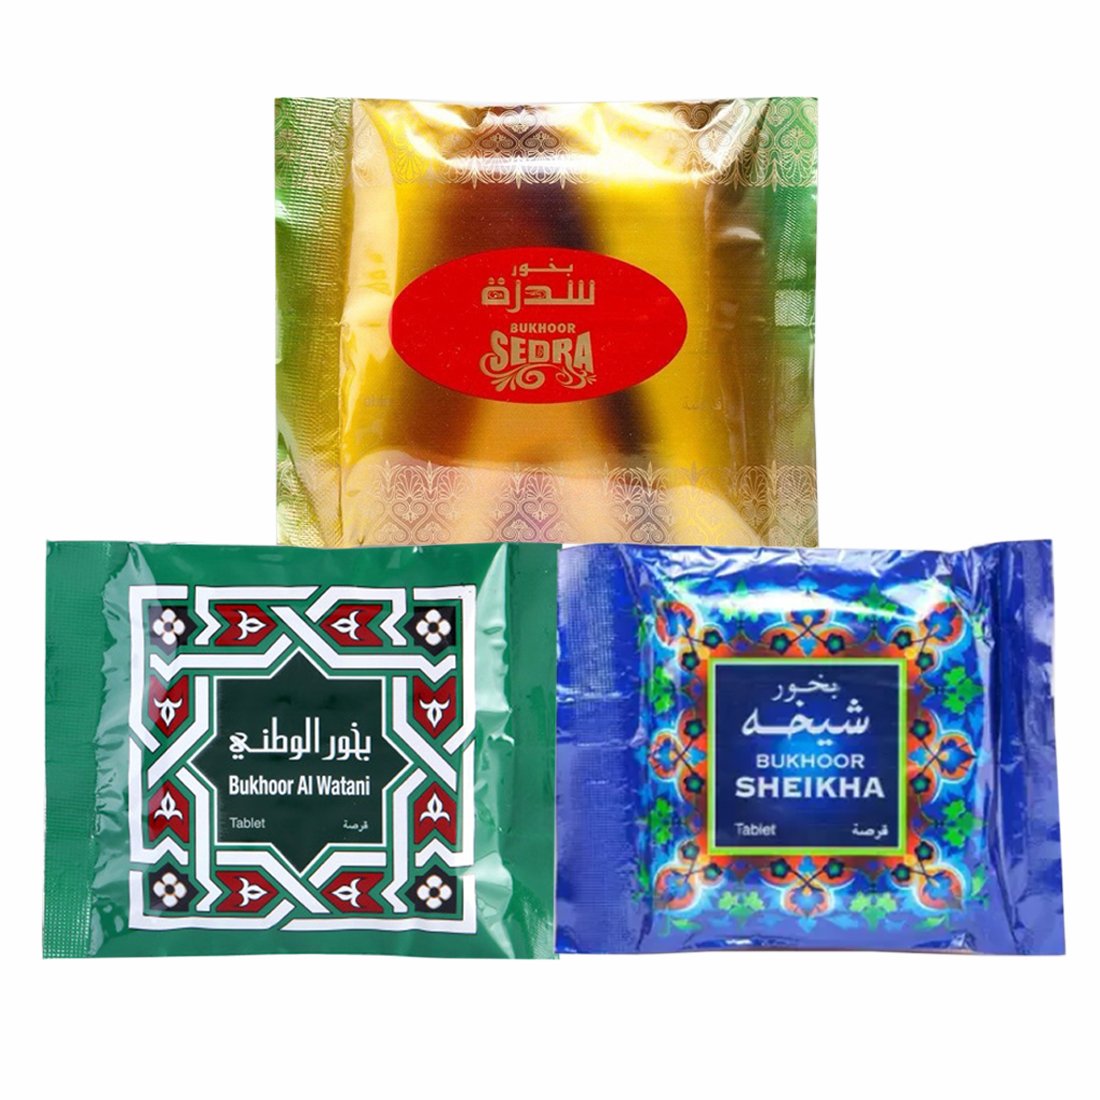 Al Haramain Bukhoor Sheikha, Sedra & Watani Bakhoor Burners Fragrance Paste Pack Combo of 3